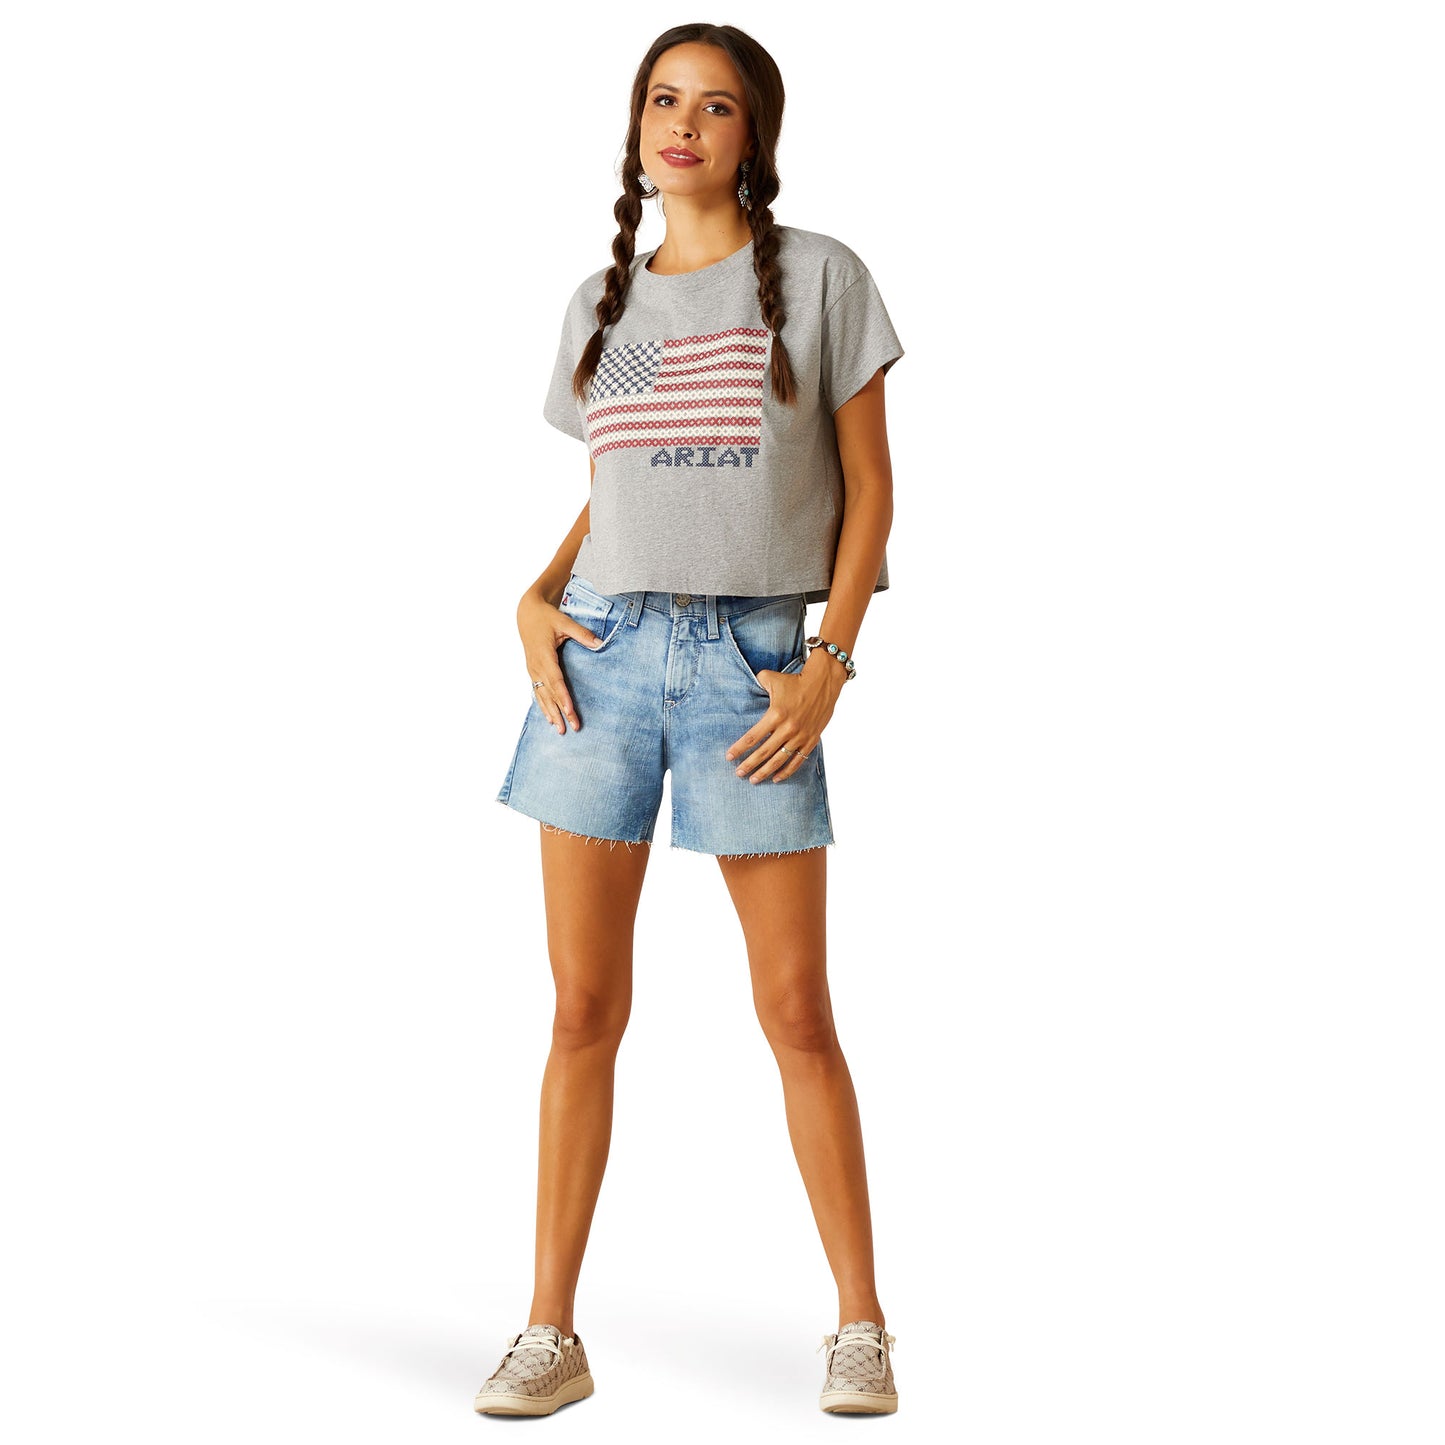 Ariat Ladies Homespun Flag Heather Grey Graphic T-Shirt 10051298